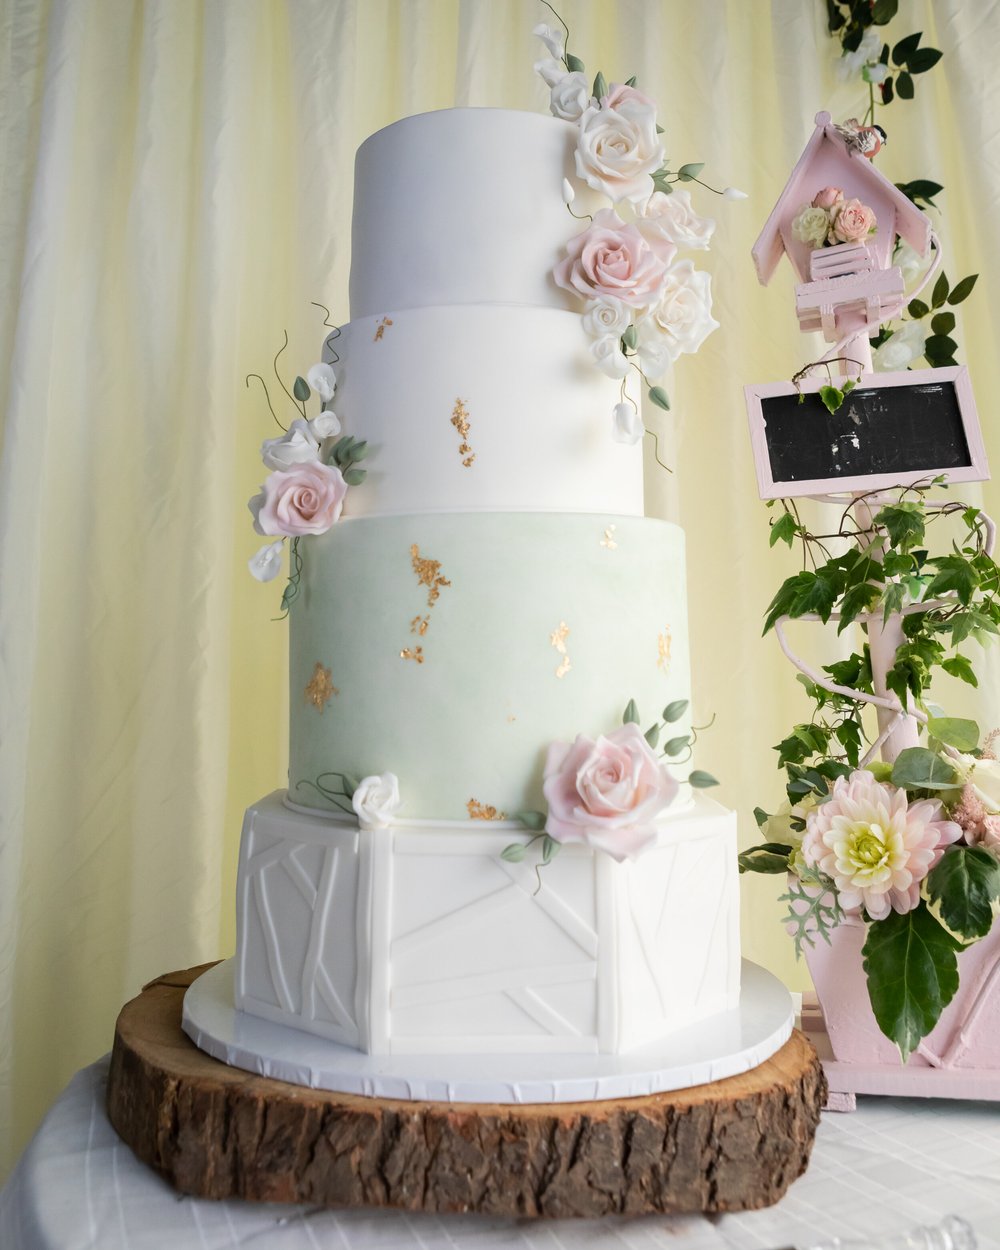 five-tier-green-and-white-wedding-cake.jpg